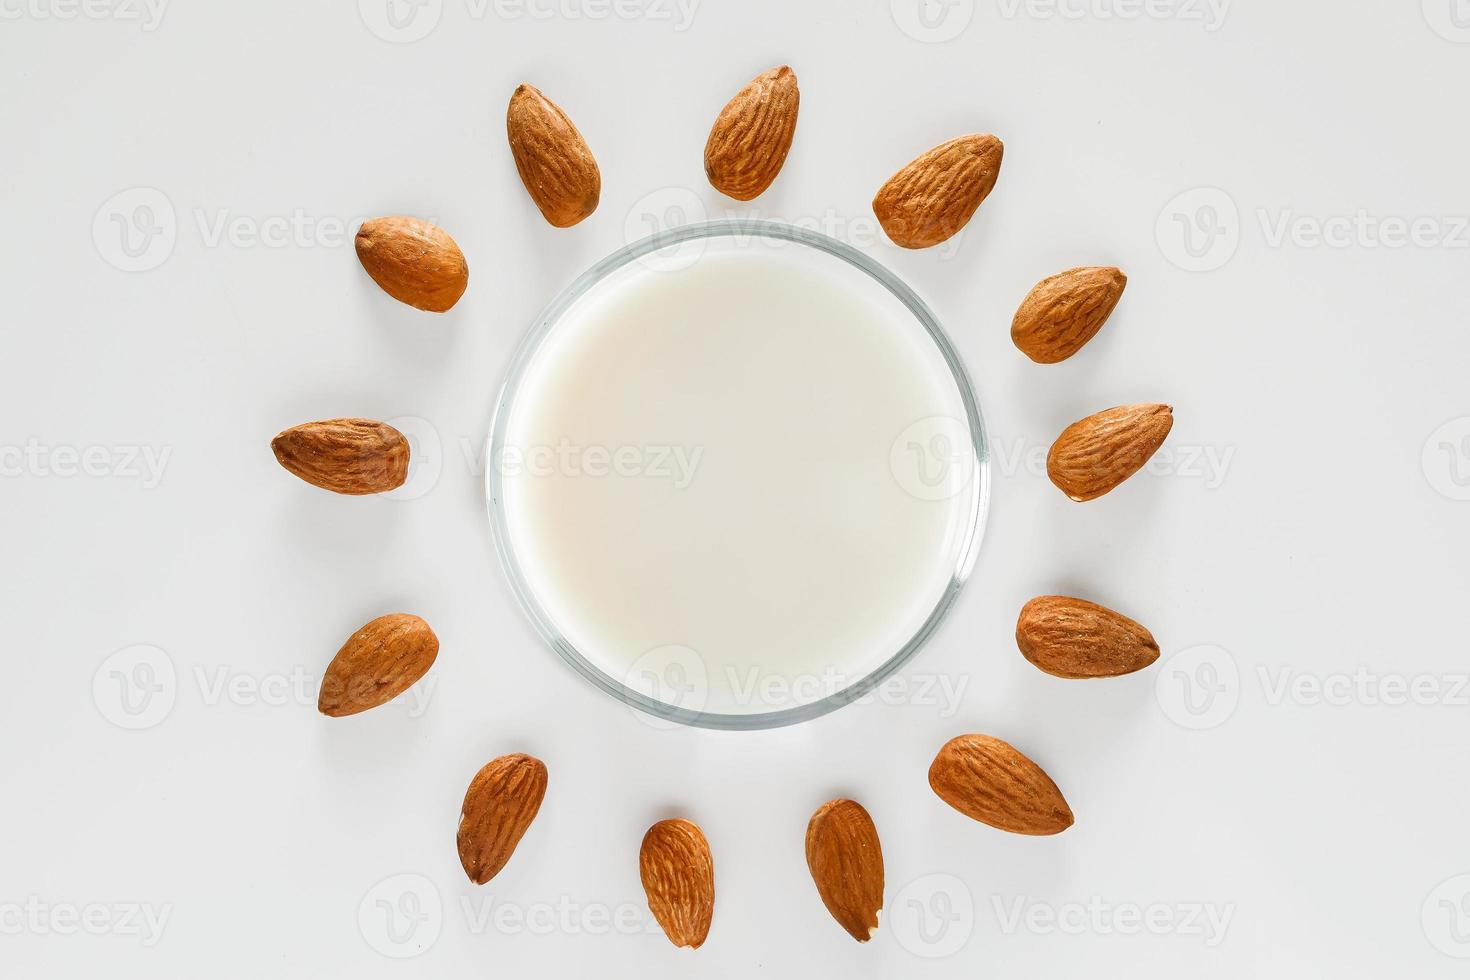 Un vaso de leche de almendras sobre un fondo blanco. foto